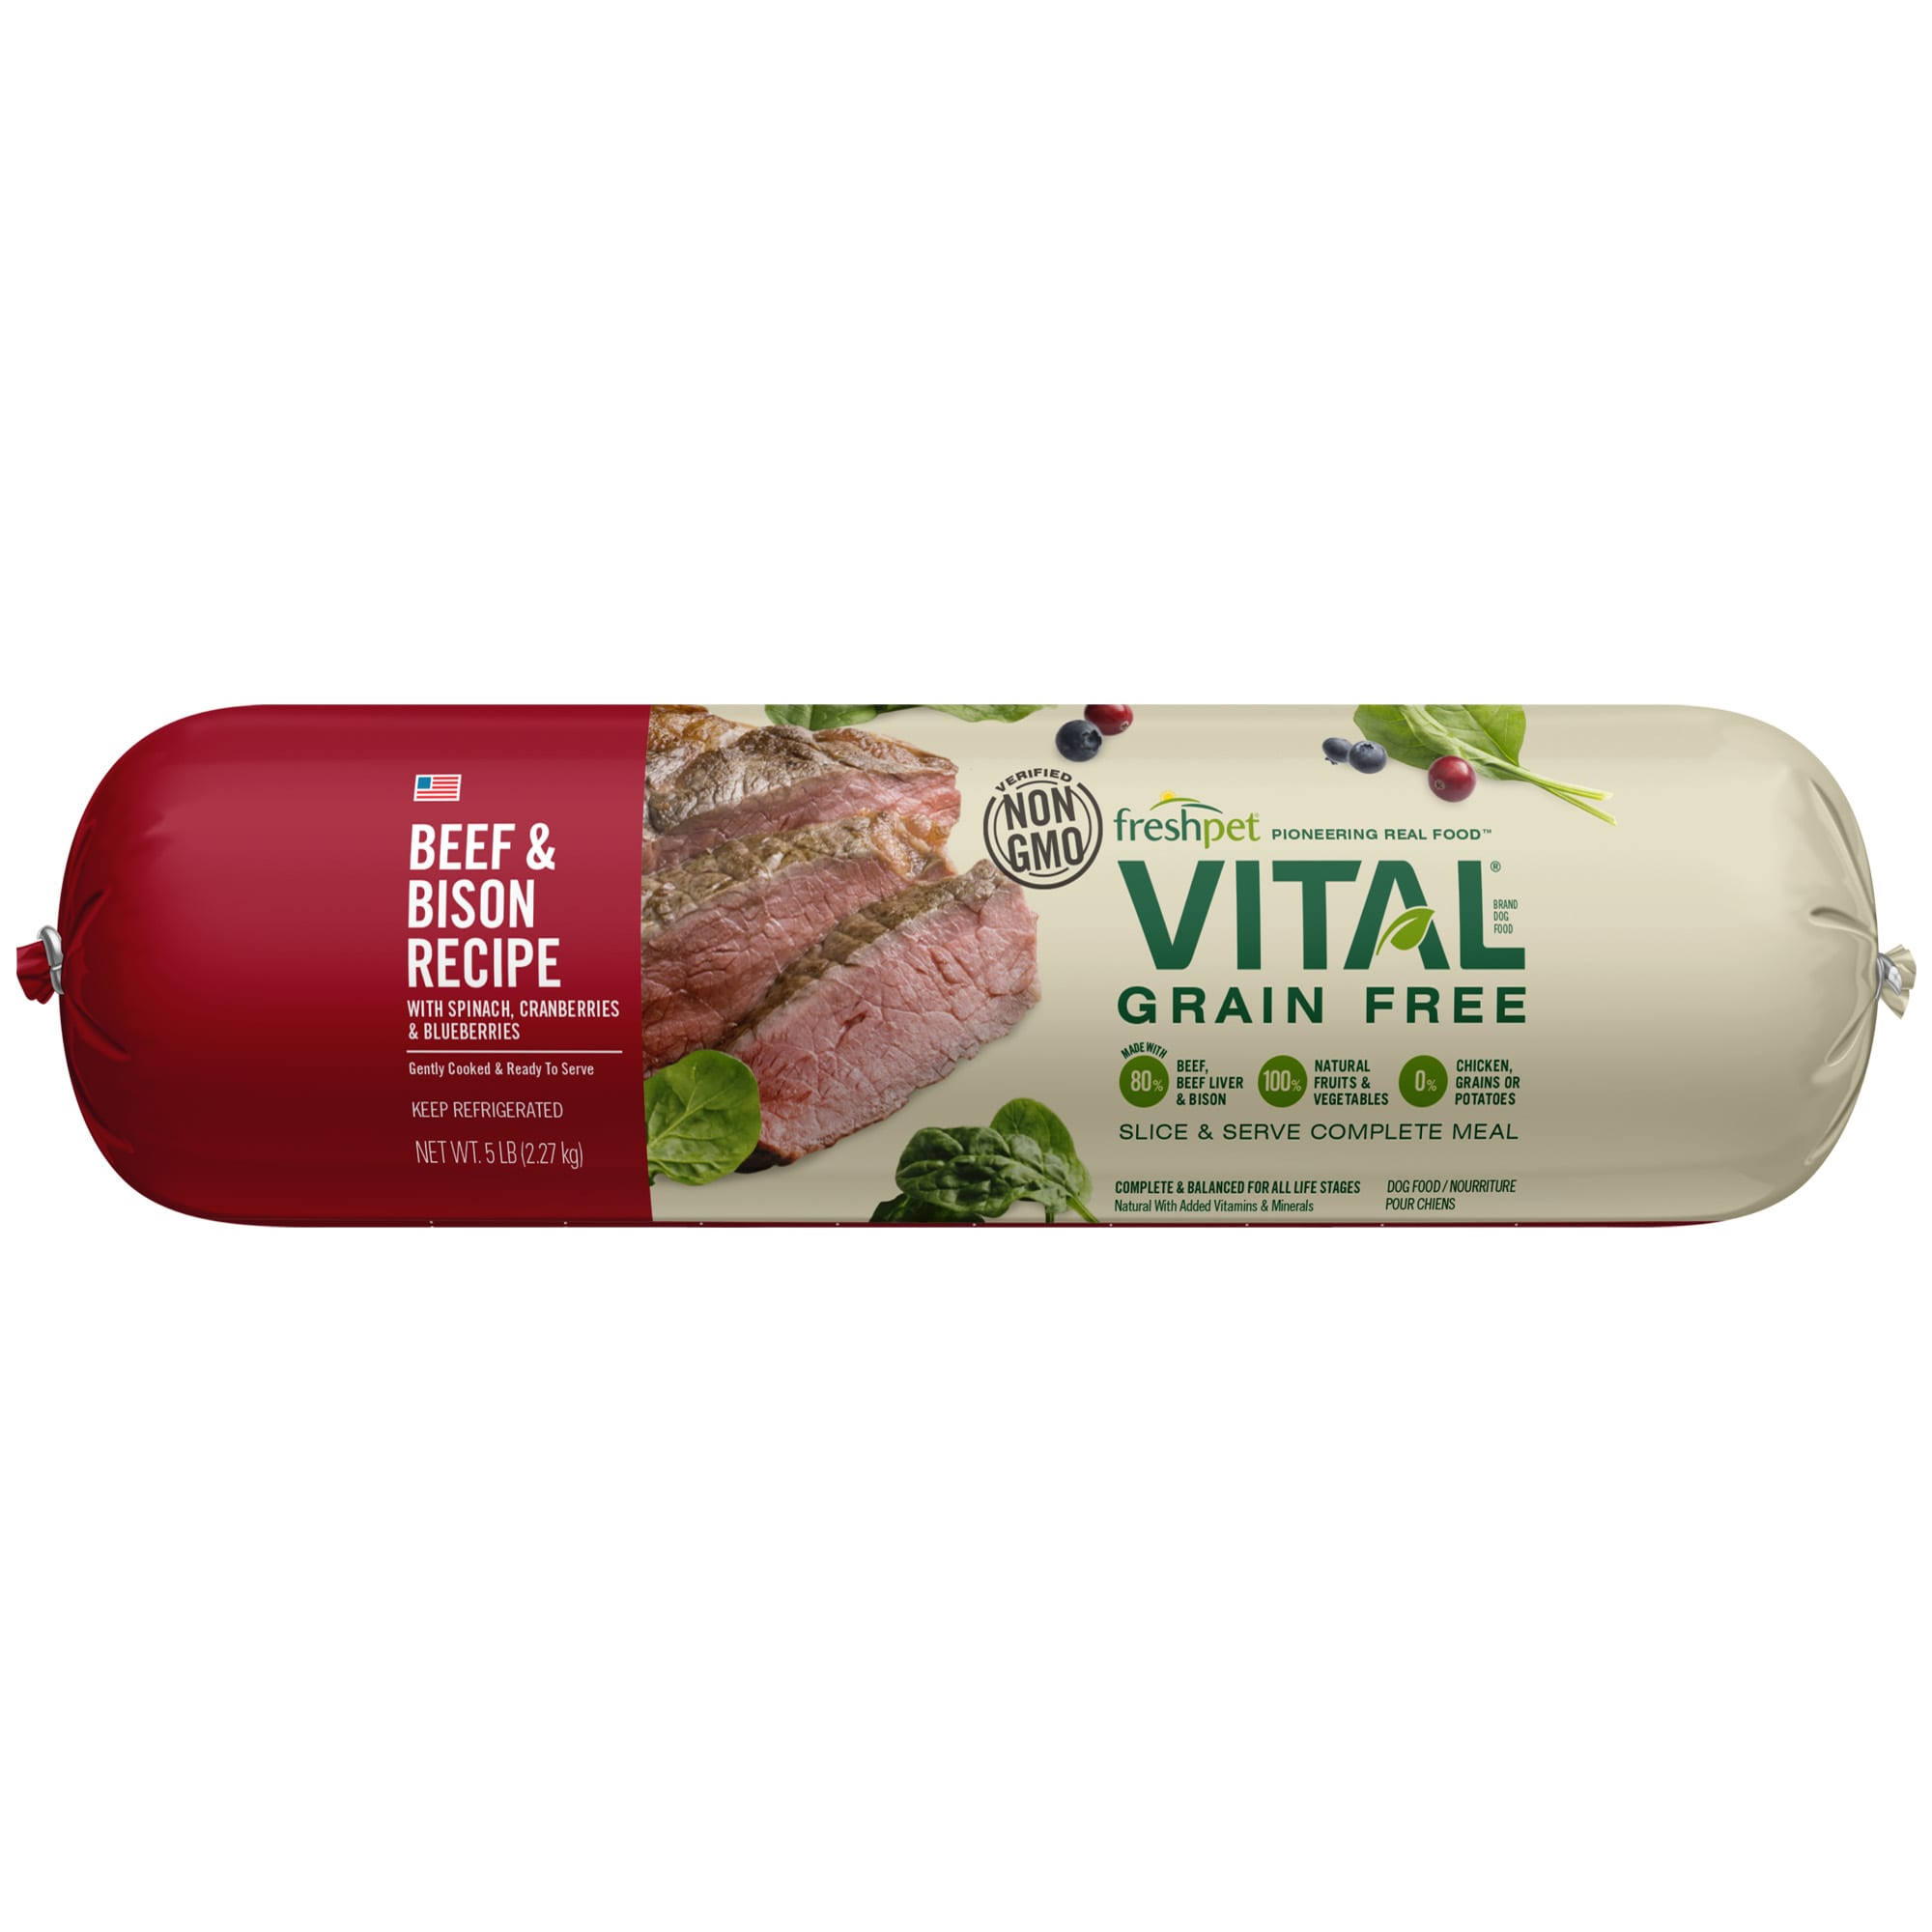 Freshpet Vital Grain Free Adult Dog Food - Beef & Bison Recipe